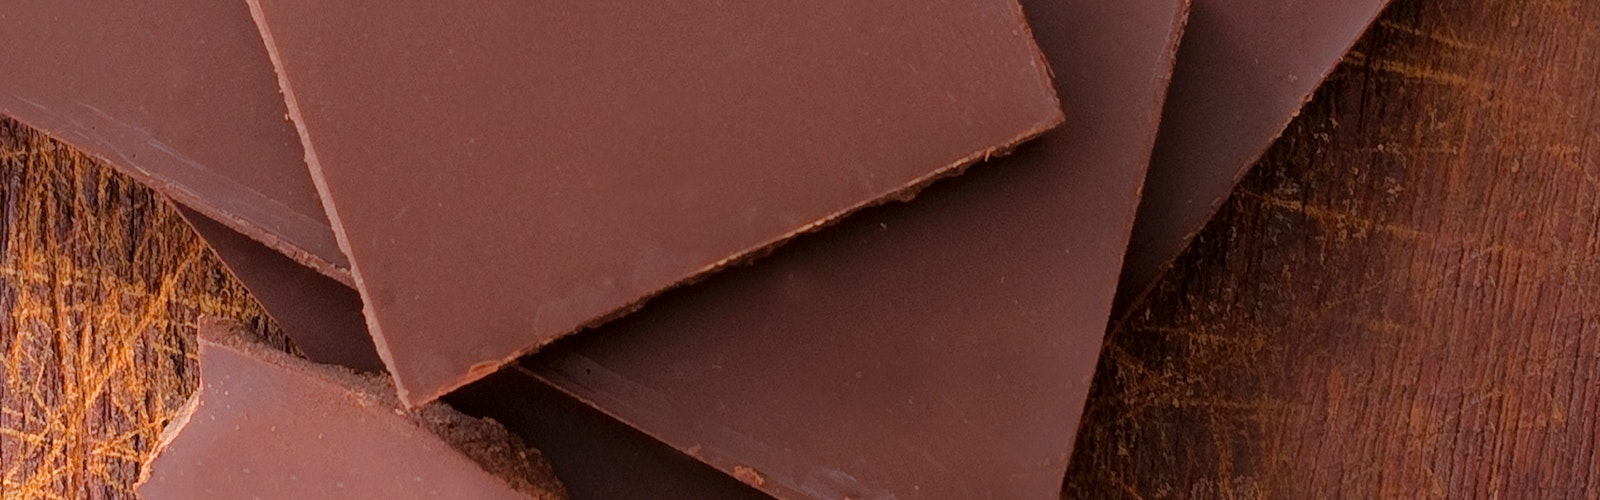 The Verse Chocolate brand design image of chocolate bars.